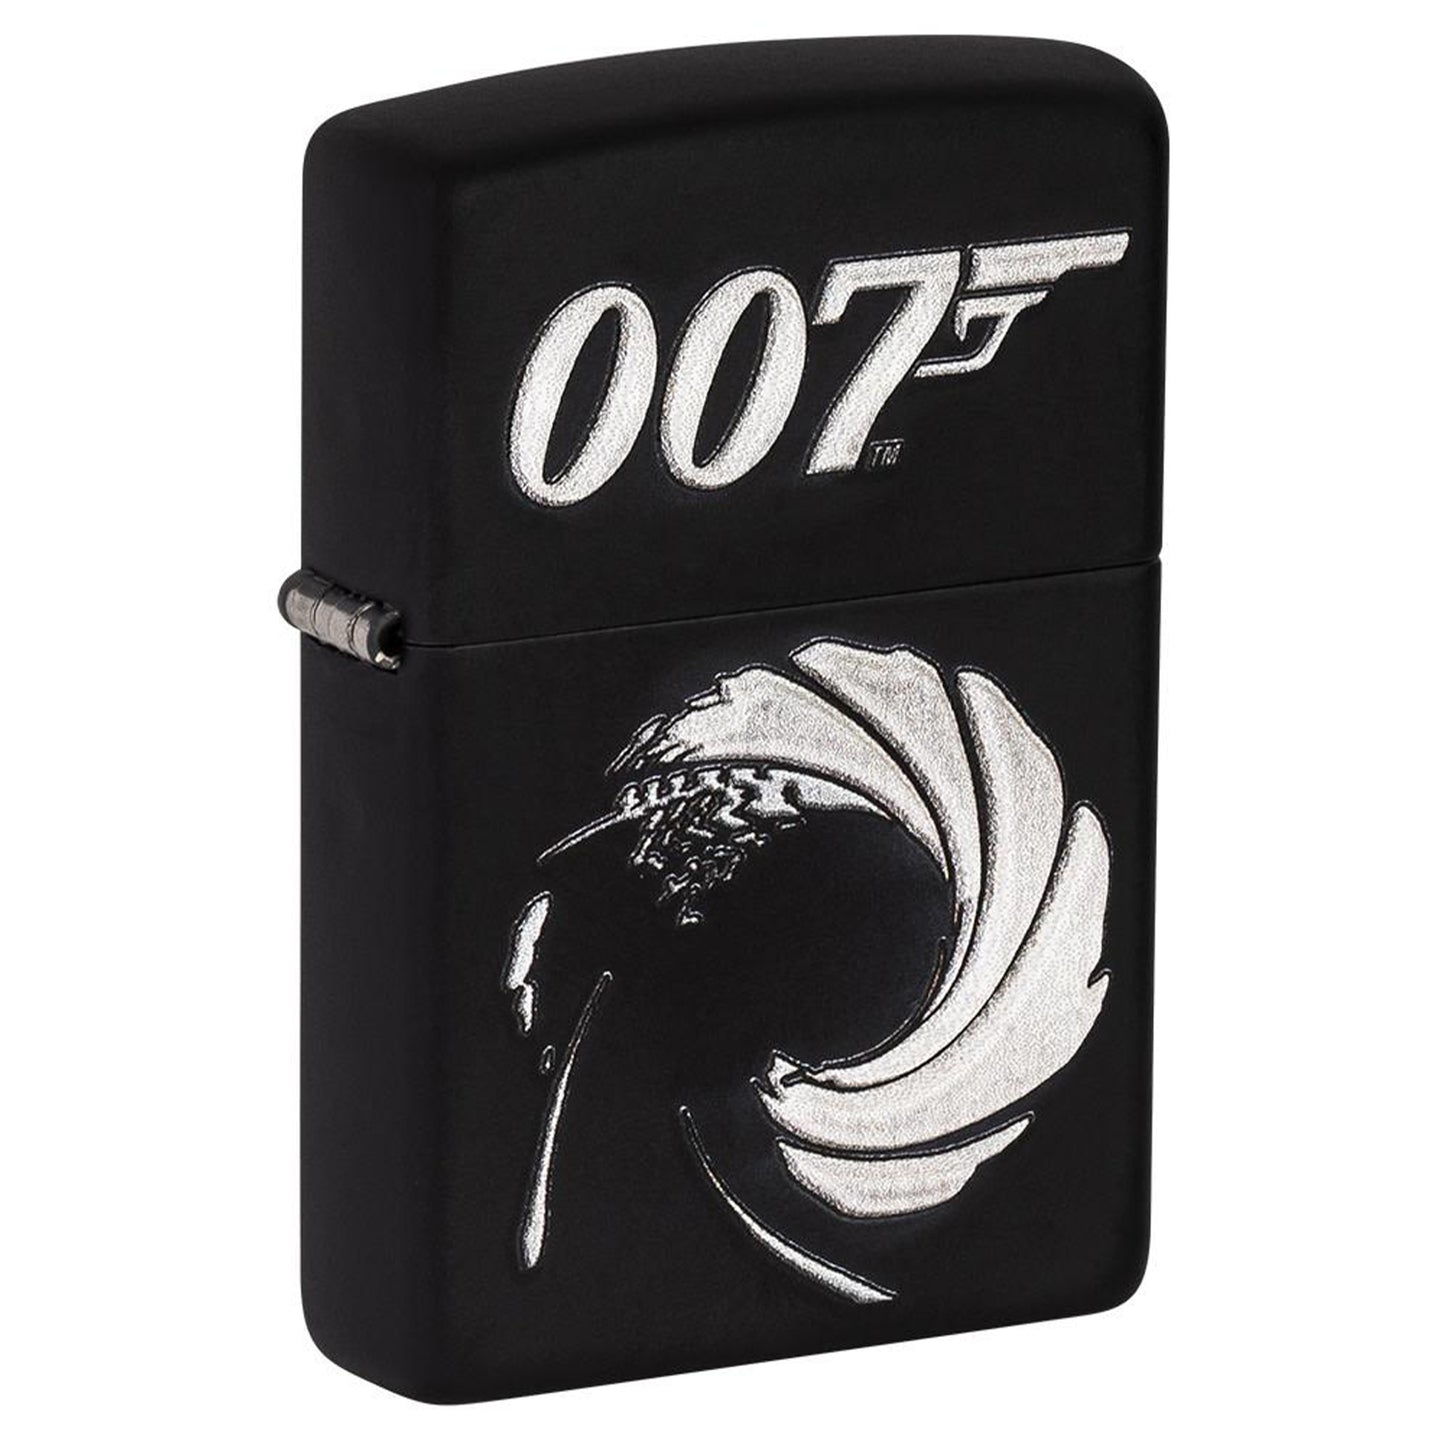 Zippo James Bond 007™ Design Lighter #21